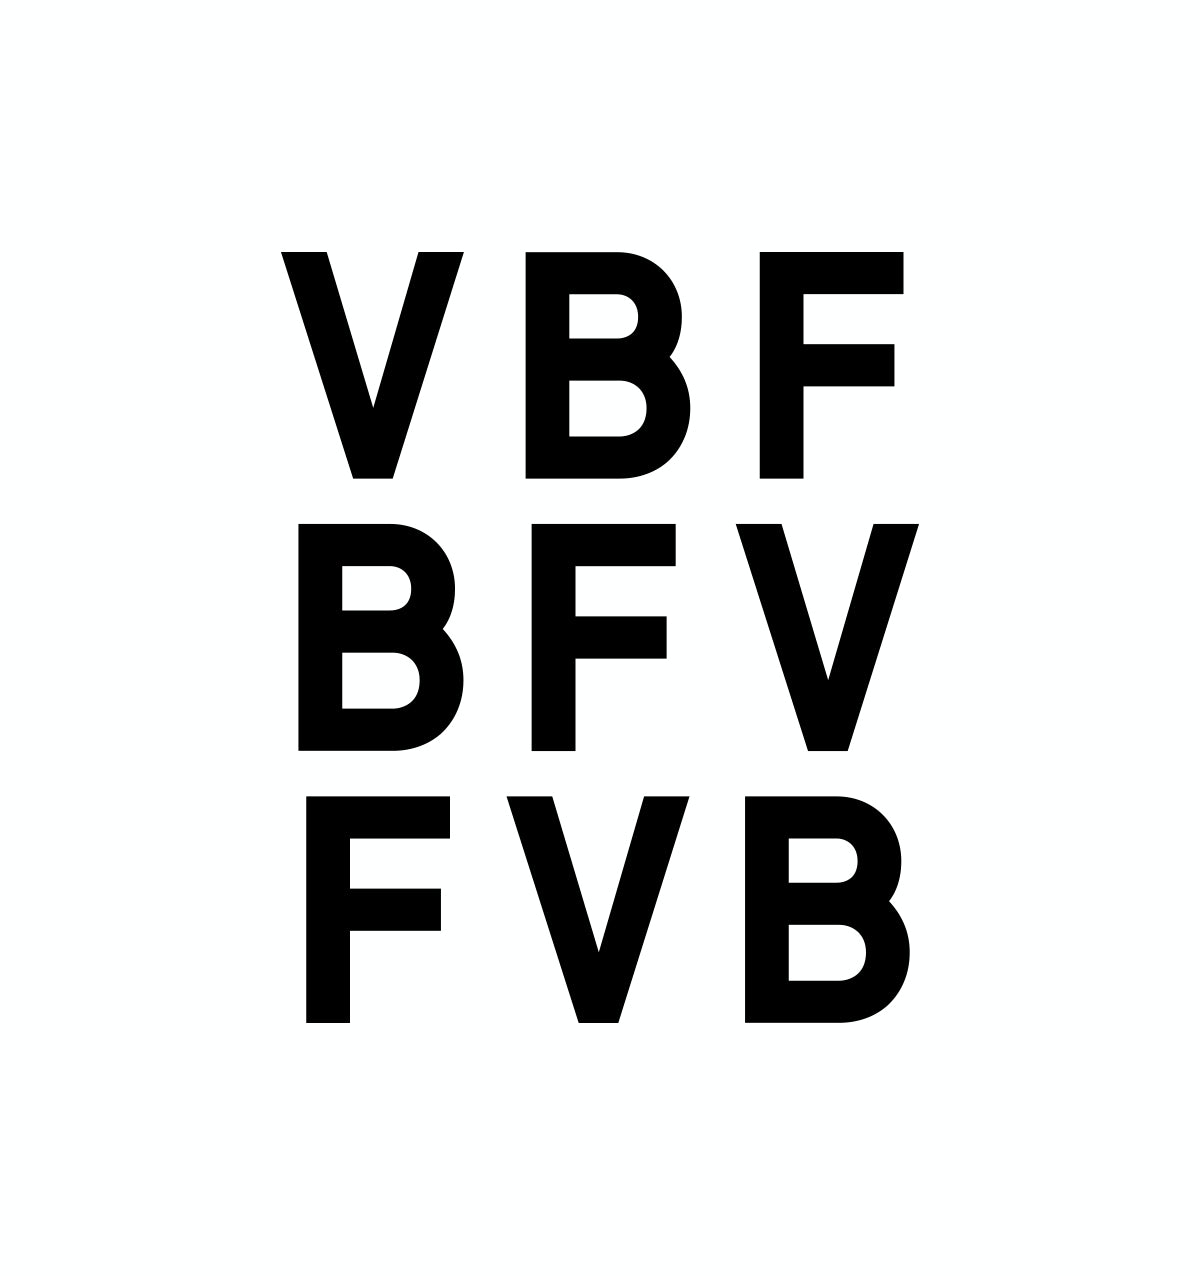 BFV ARCHITECTES: Innovative and Sustainable Architecture